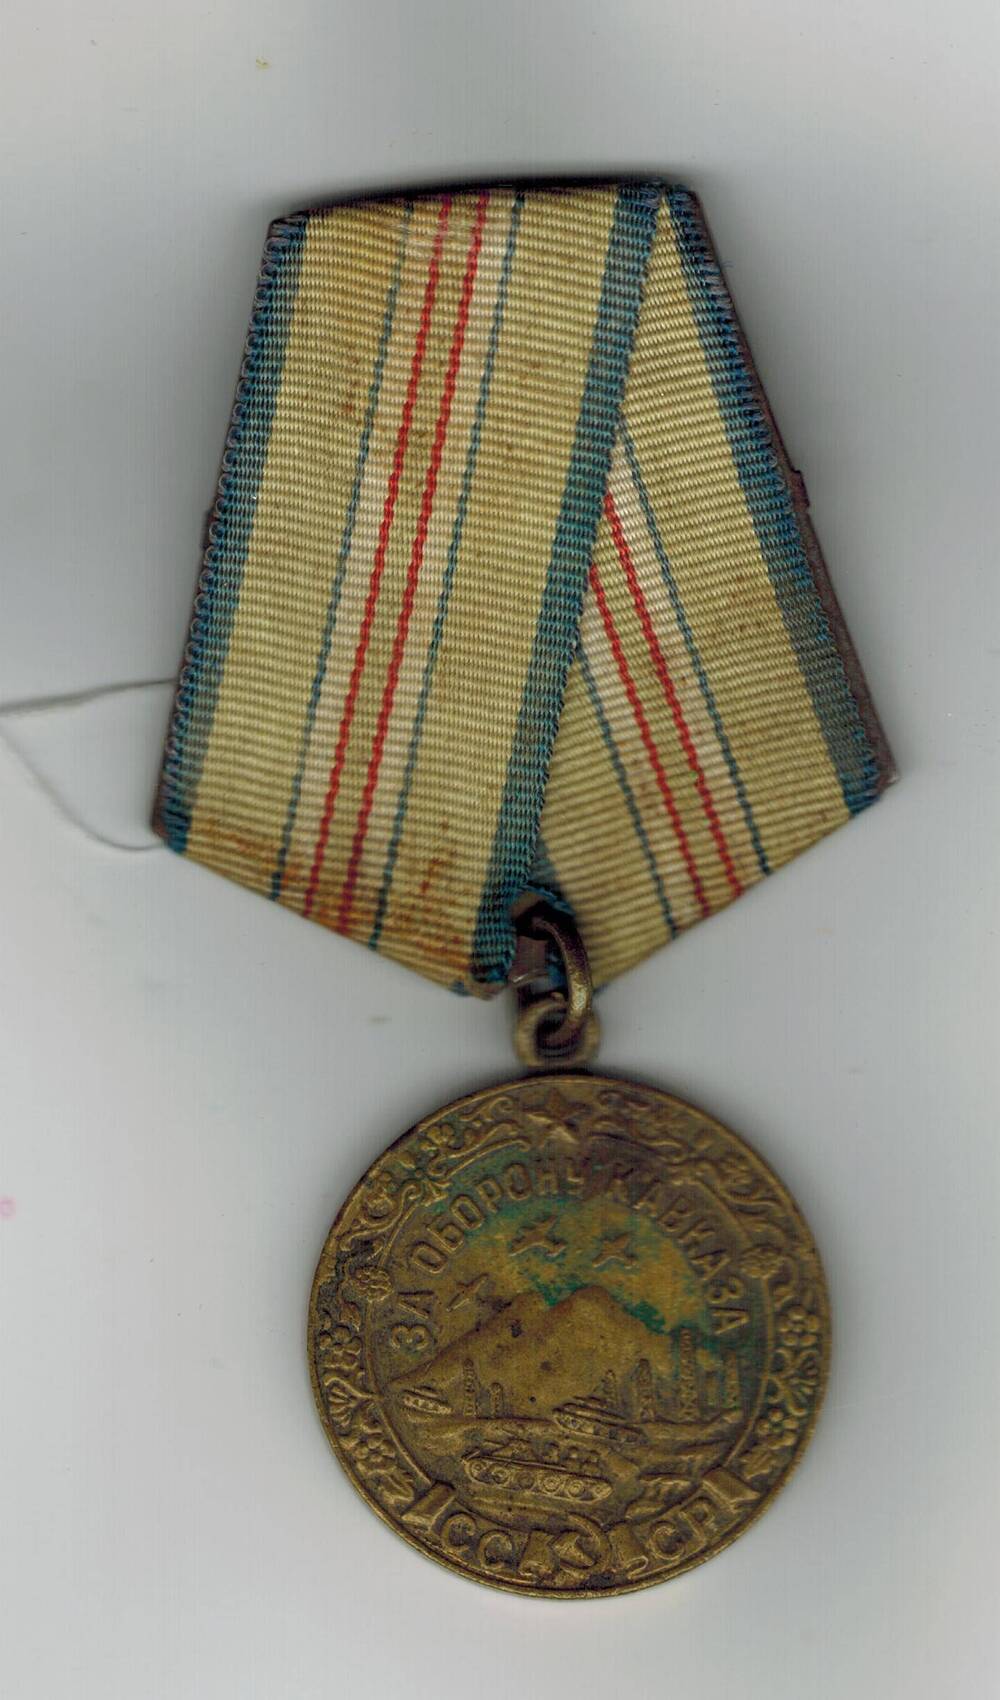 Медаль За оборону Кавказа